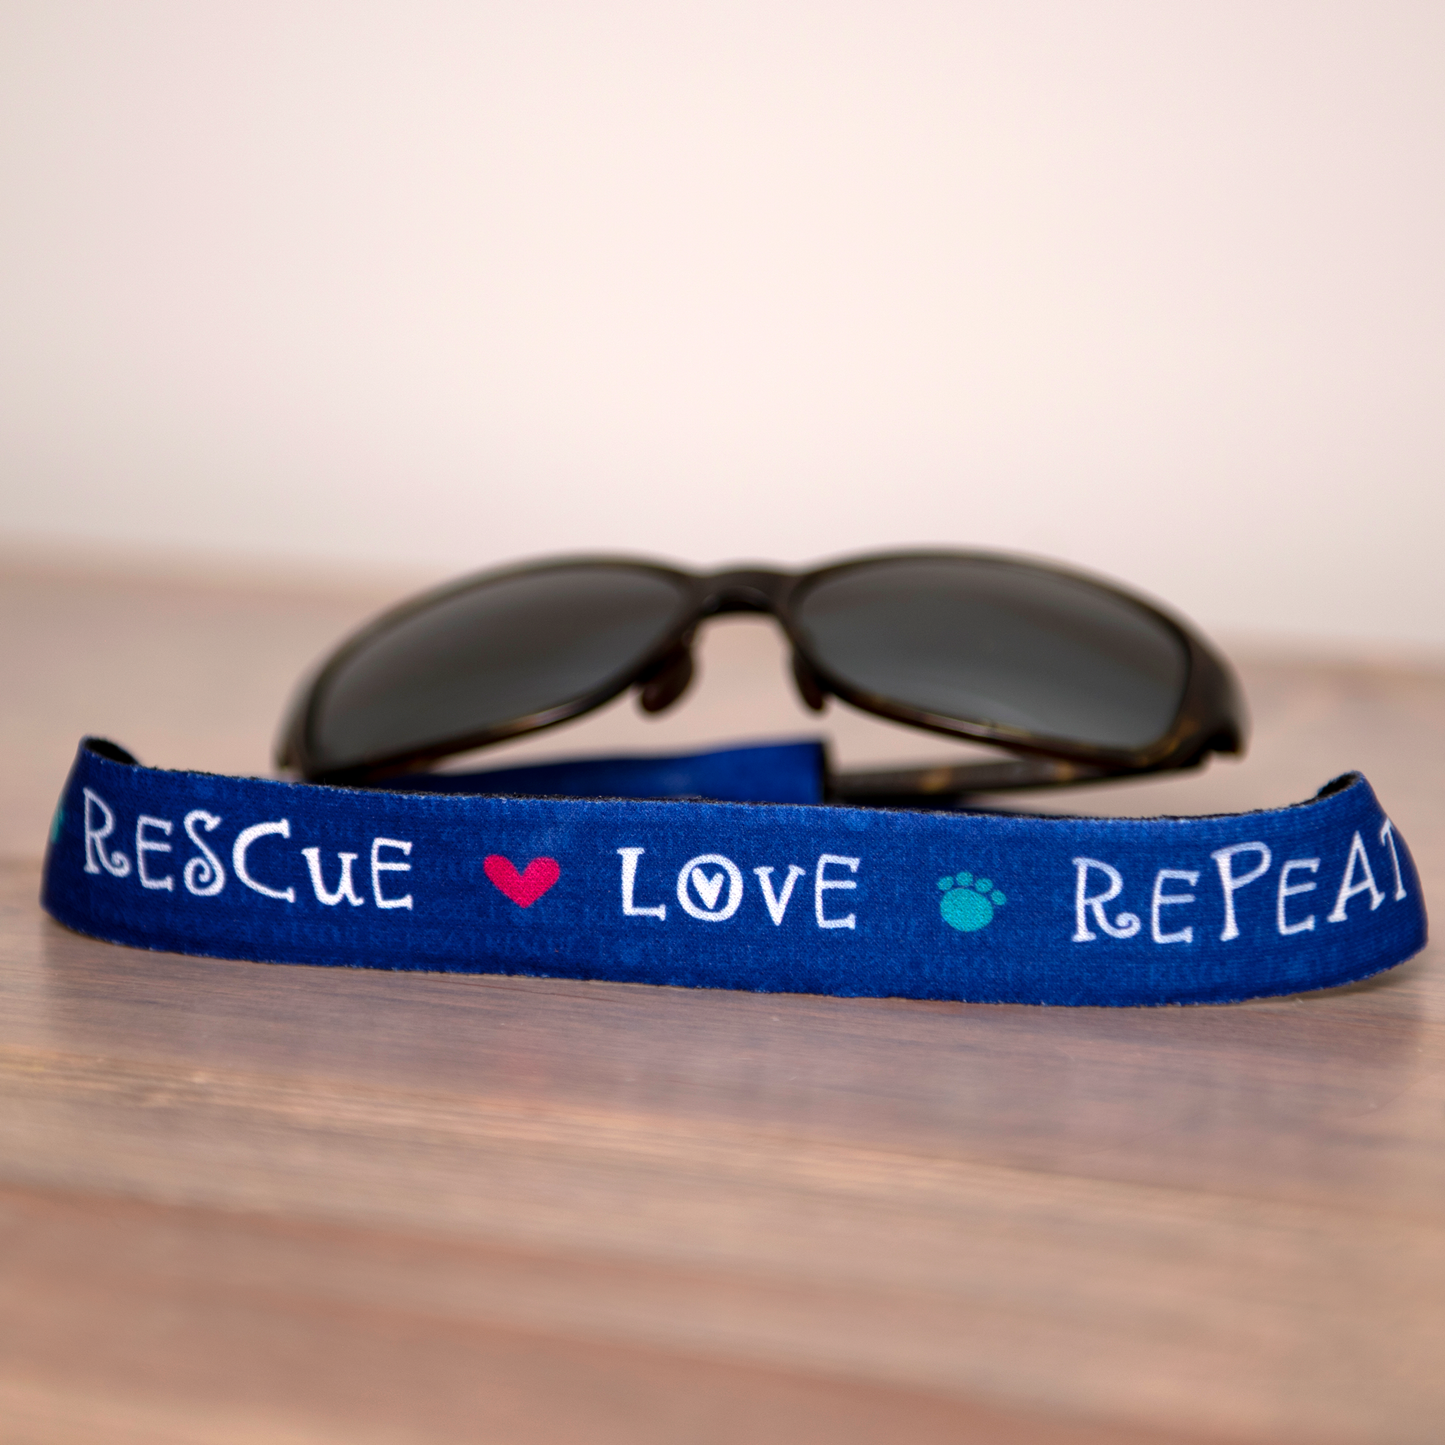 Sunglass Holders - Rescue Love Repeat